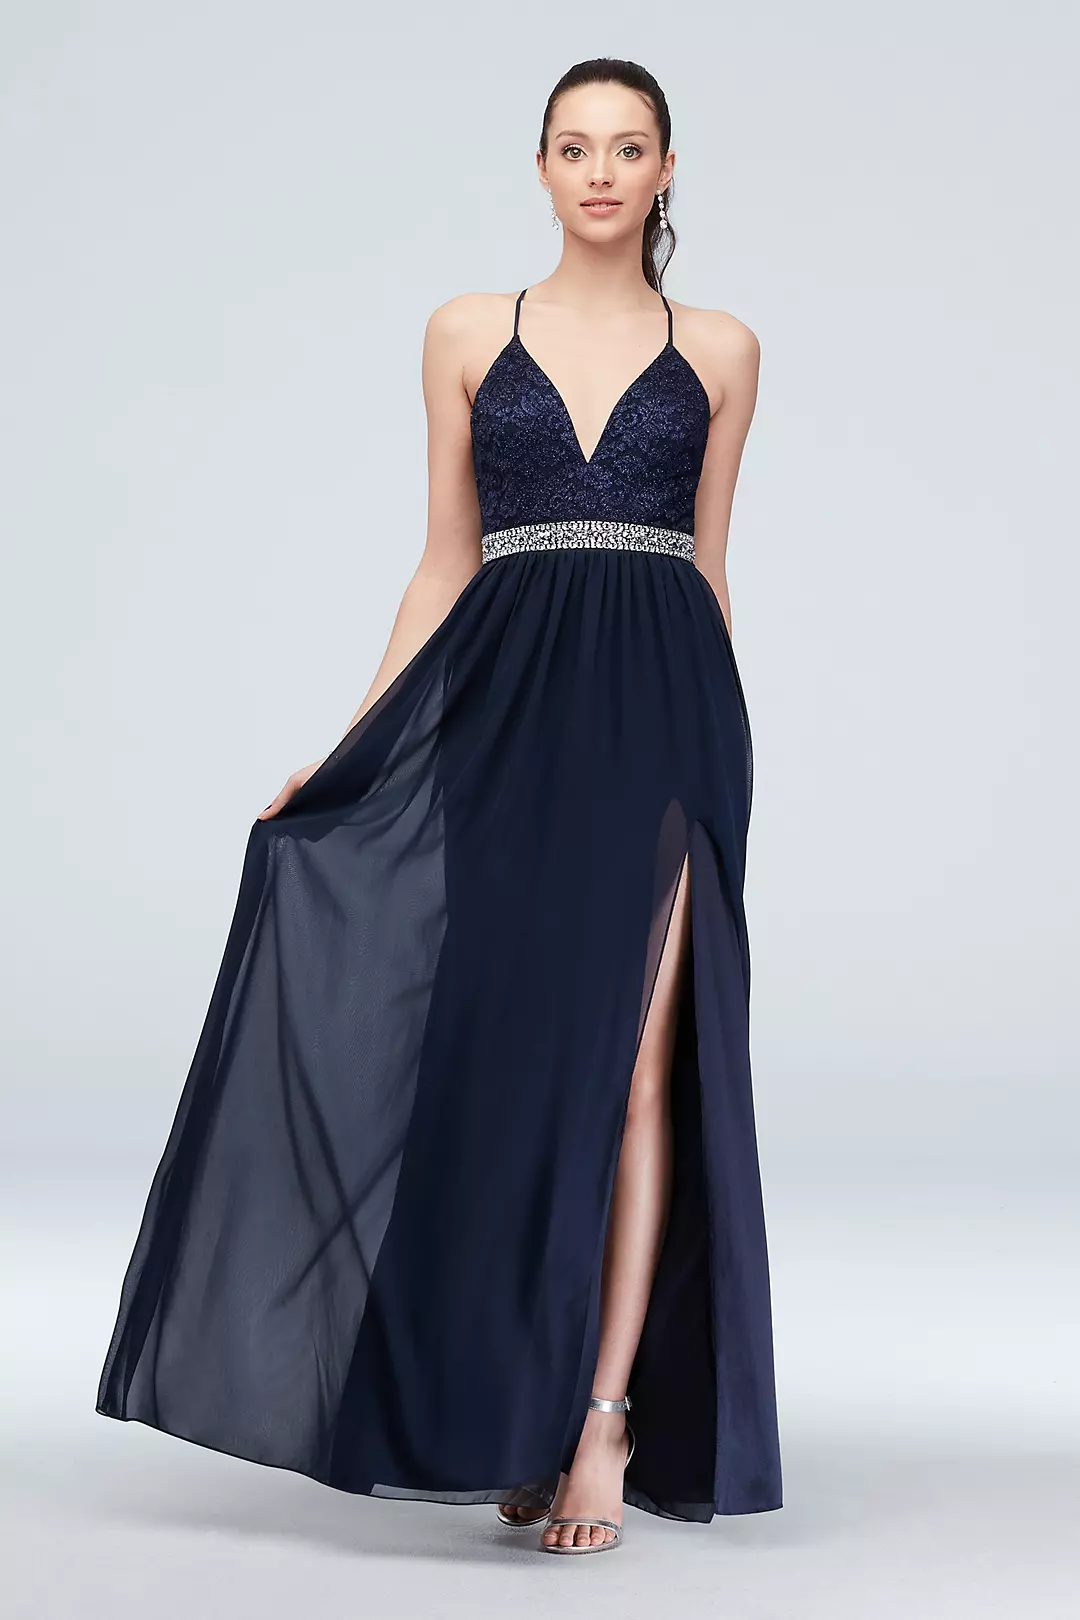 Glittery Lace Deep-V Skinny-Strap Dress with Belt Image